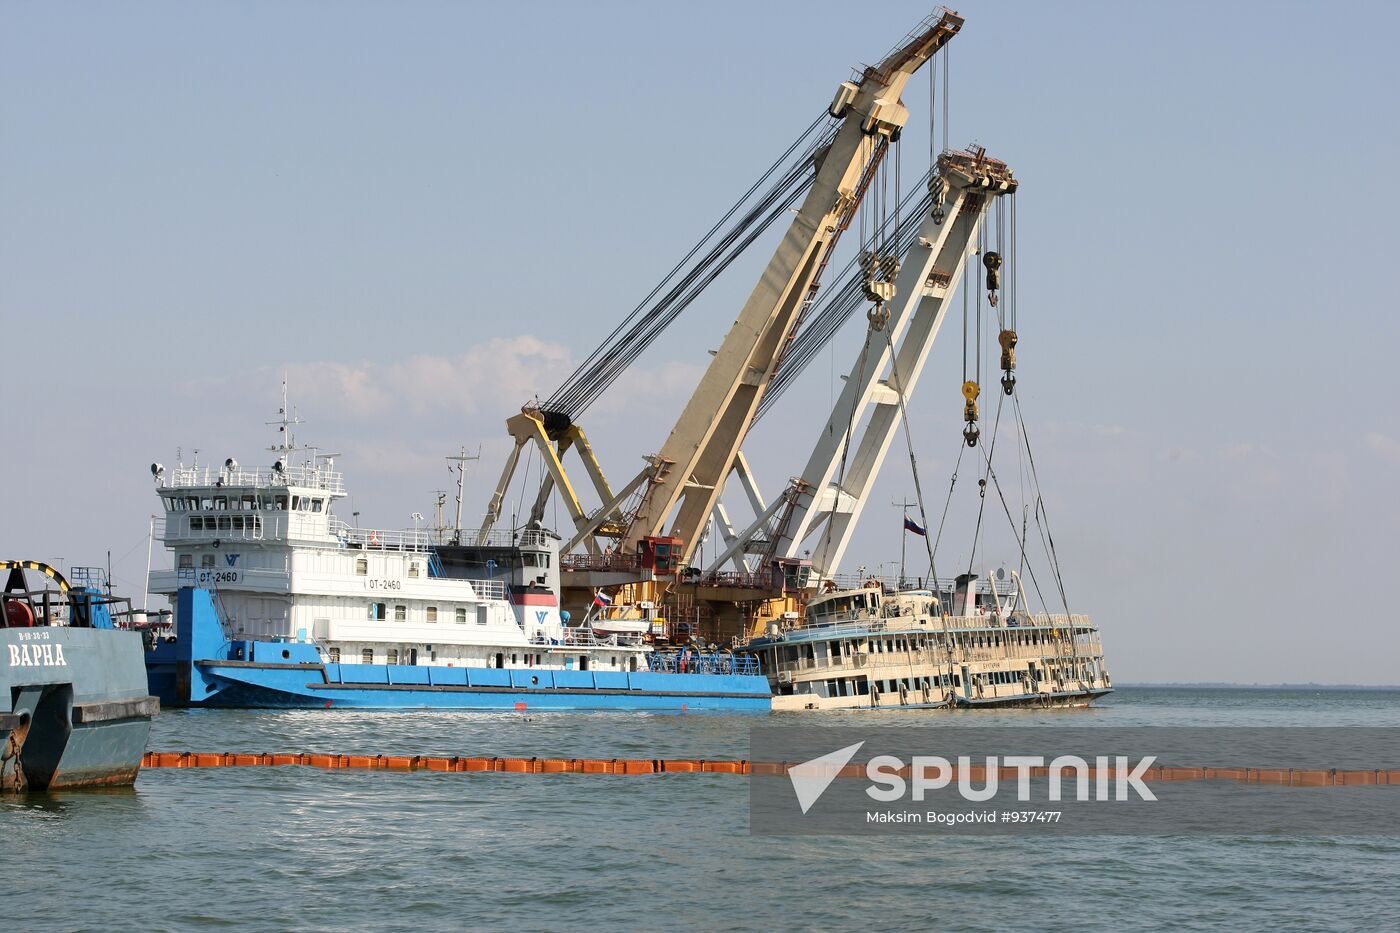 Bulgaria cruise ship lifting operations